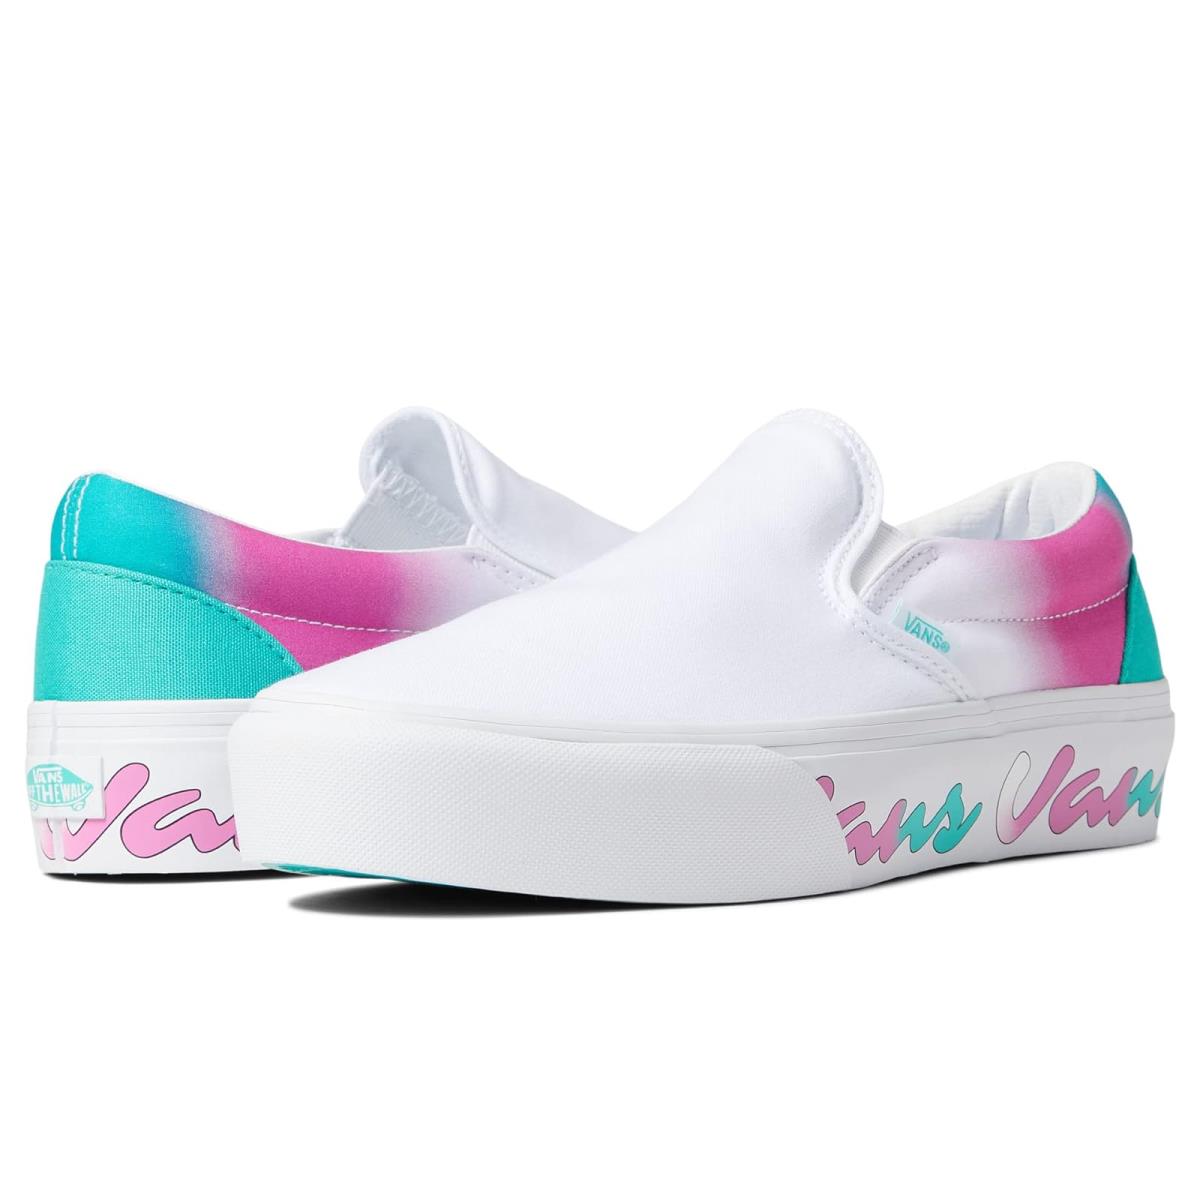 Unisex Sneakers Athletic Shoes Vans Classic Slip-on Platform (Spring Fade) White/True White